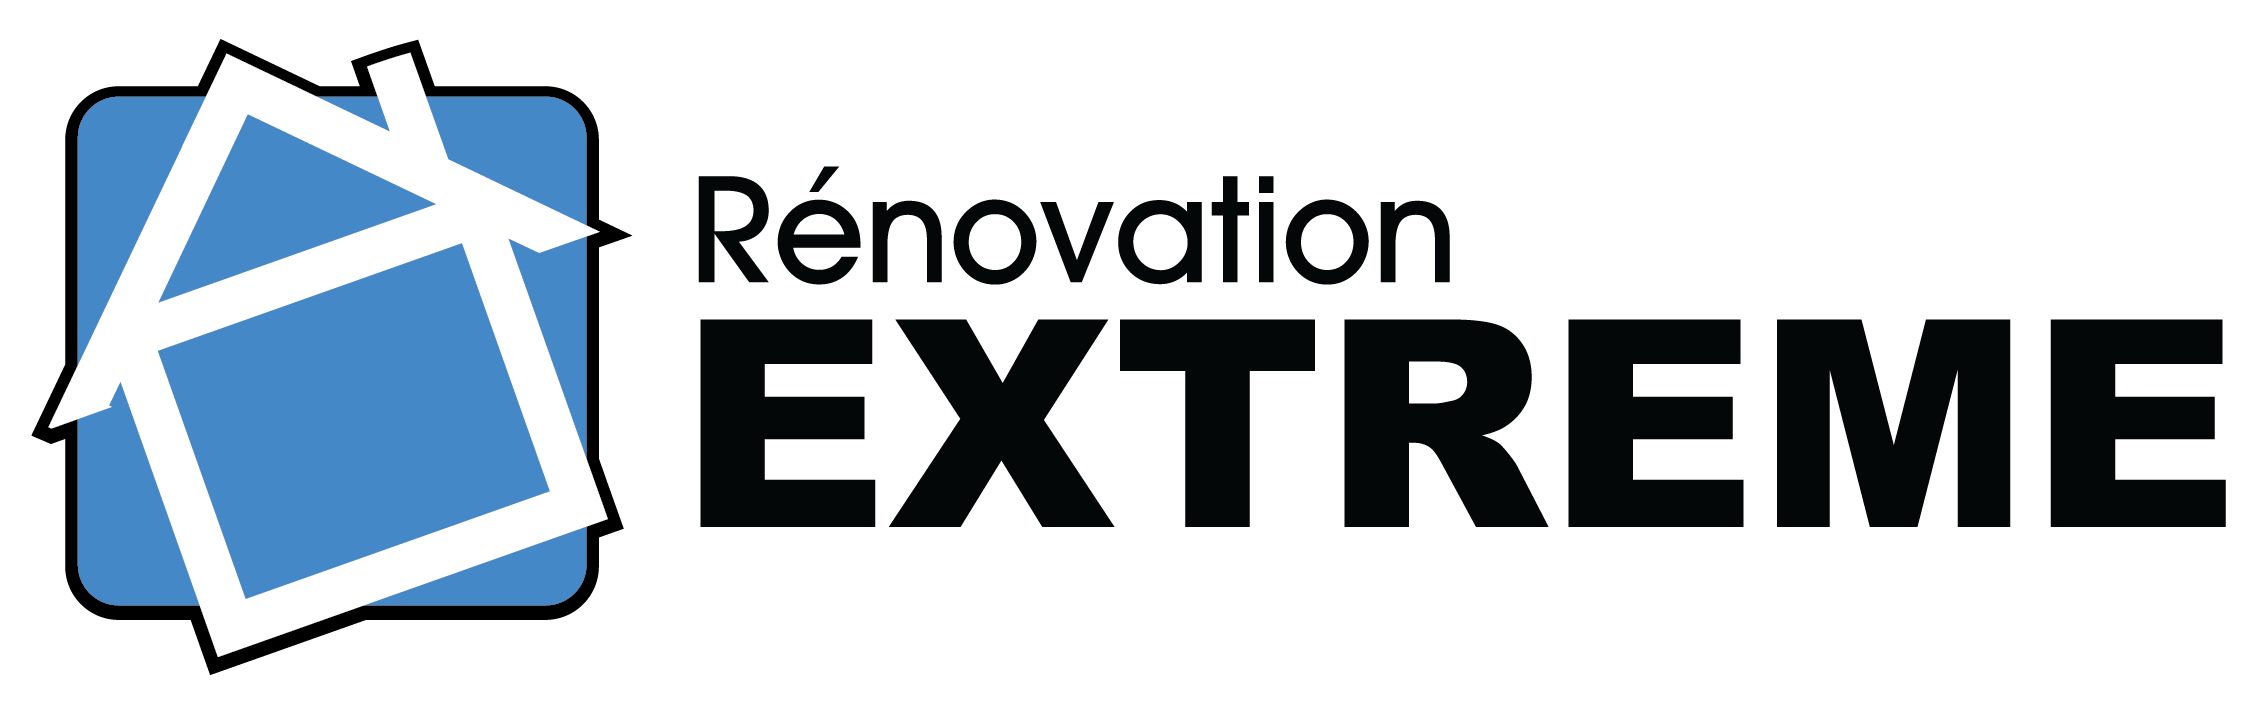 renovation extreme logo